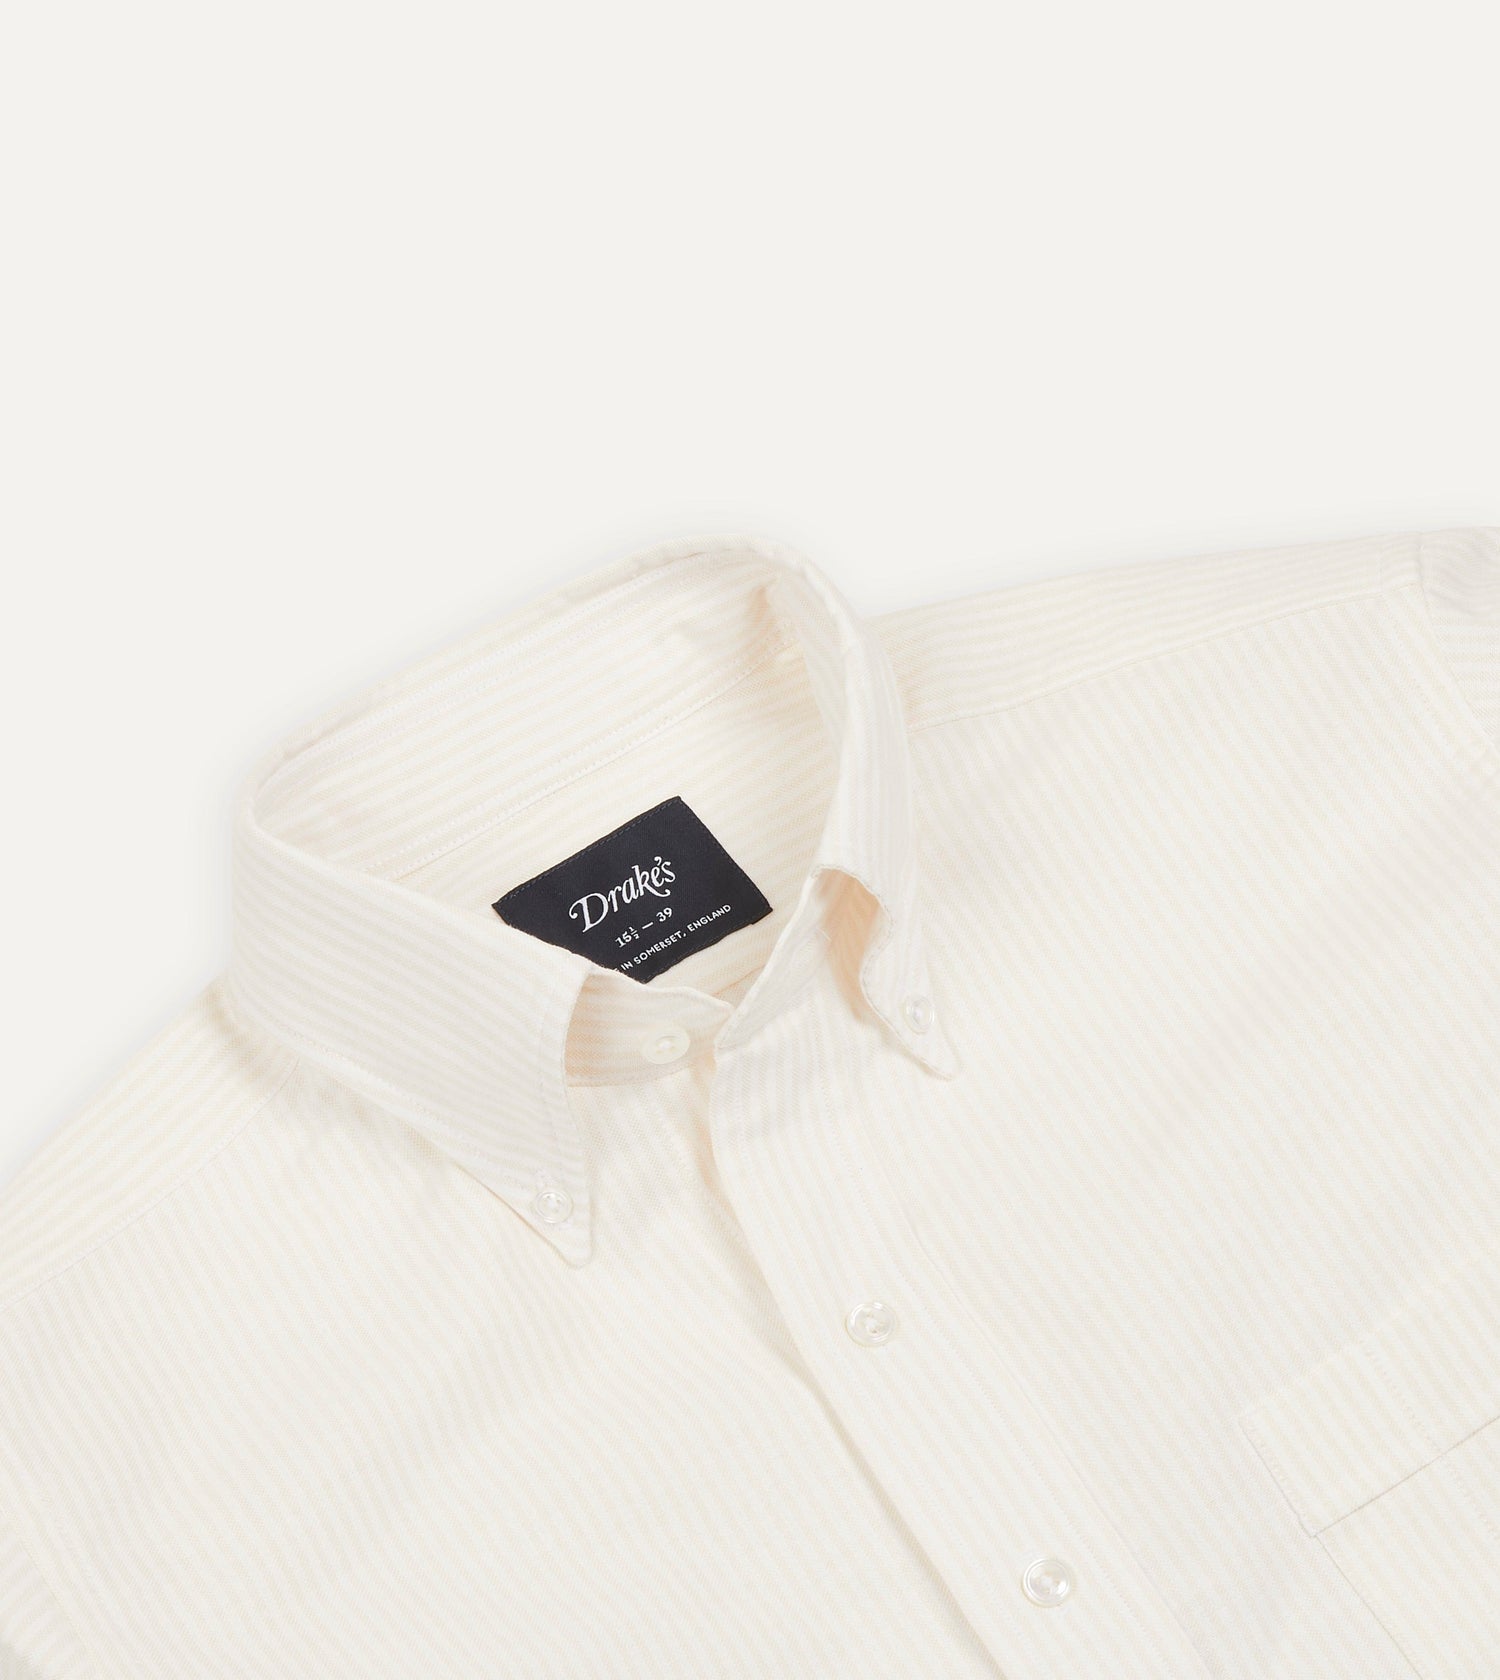 Cream Ticking Stripe Cotton Oxford Cloth Button-Down Shirt